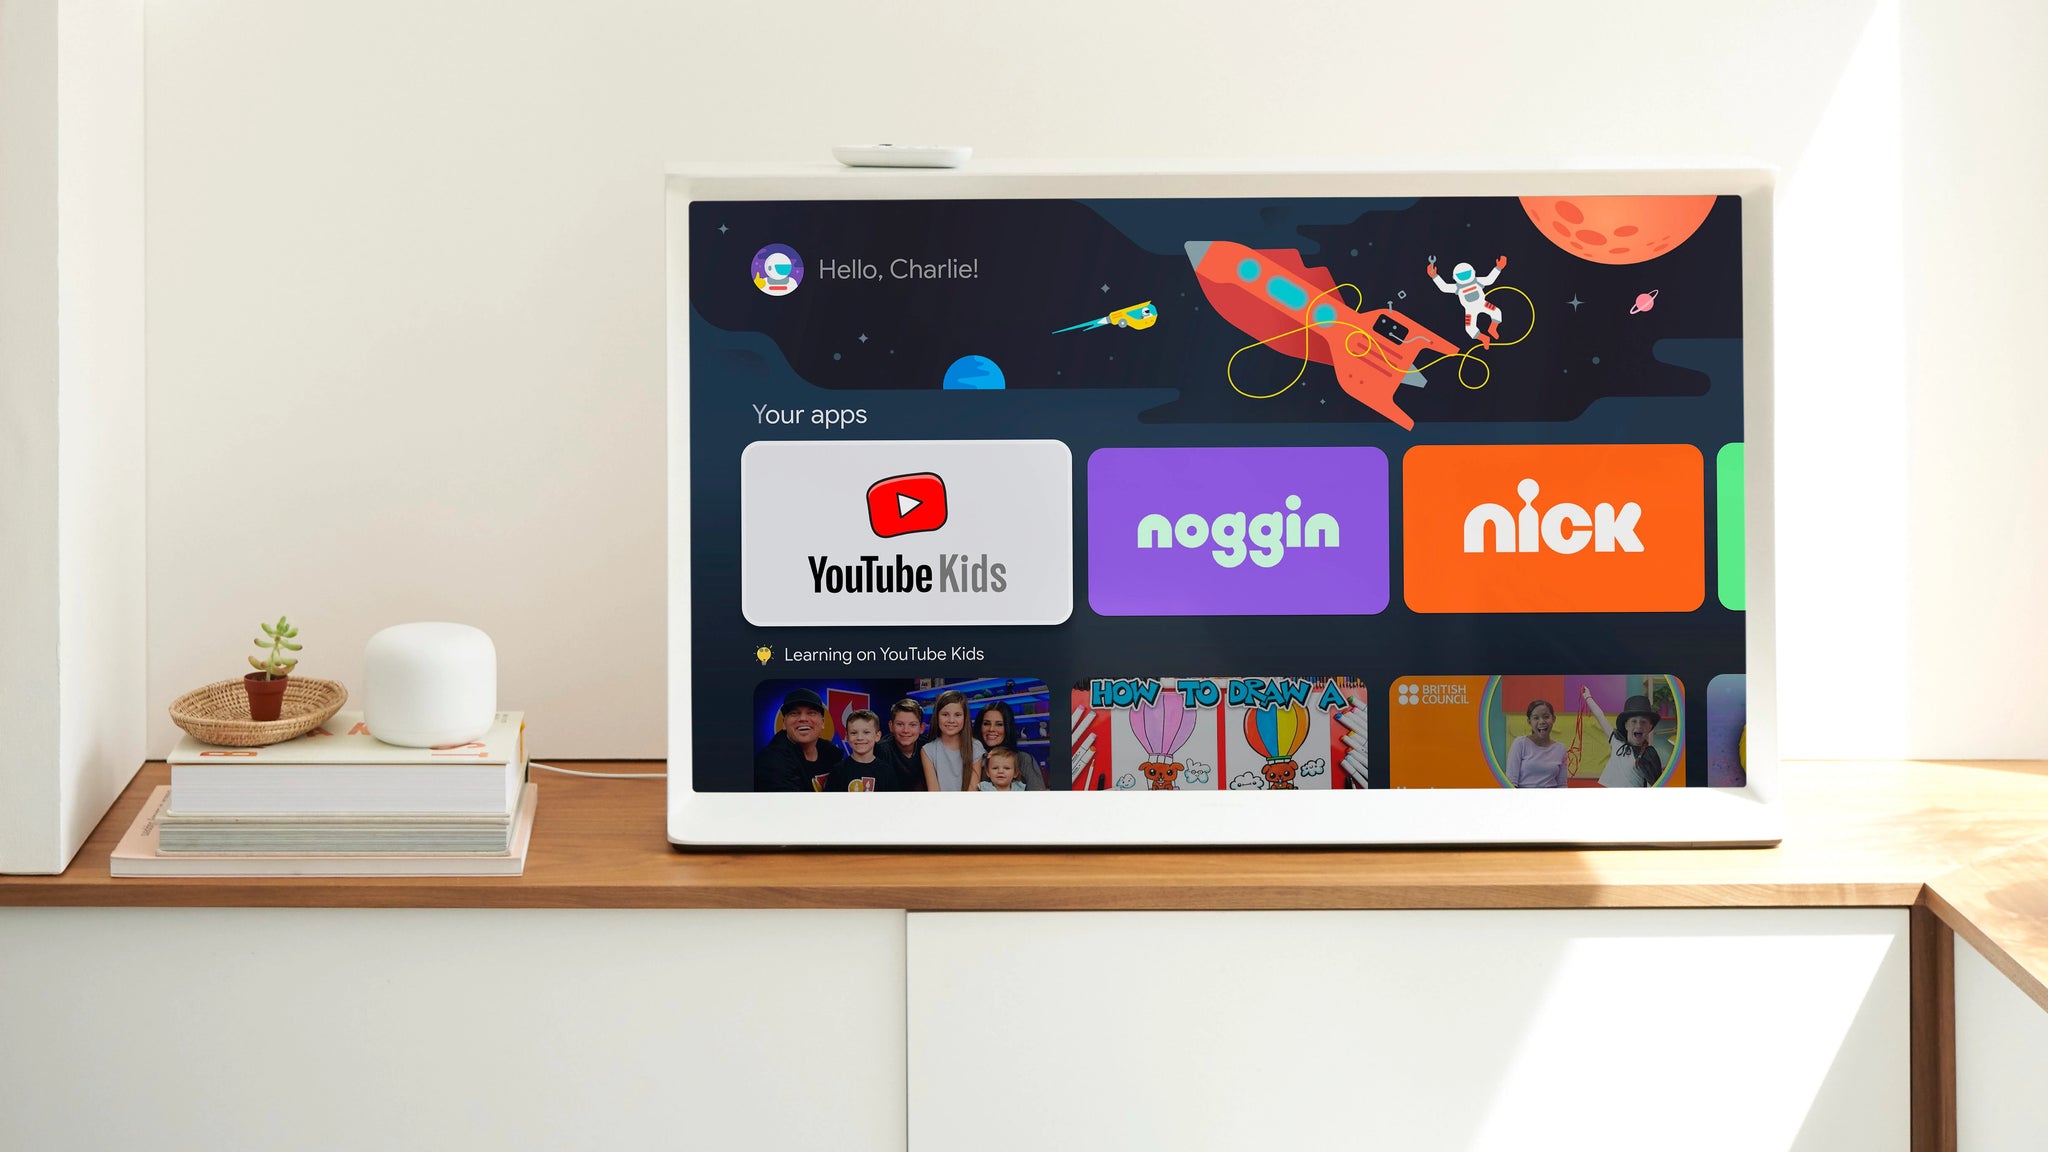 Google Chromecast 4th Generation with Google TV Streaming Media